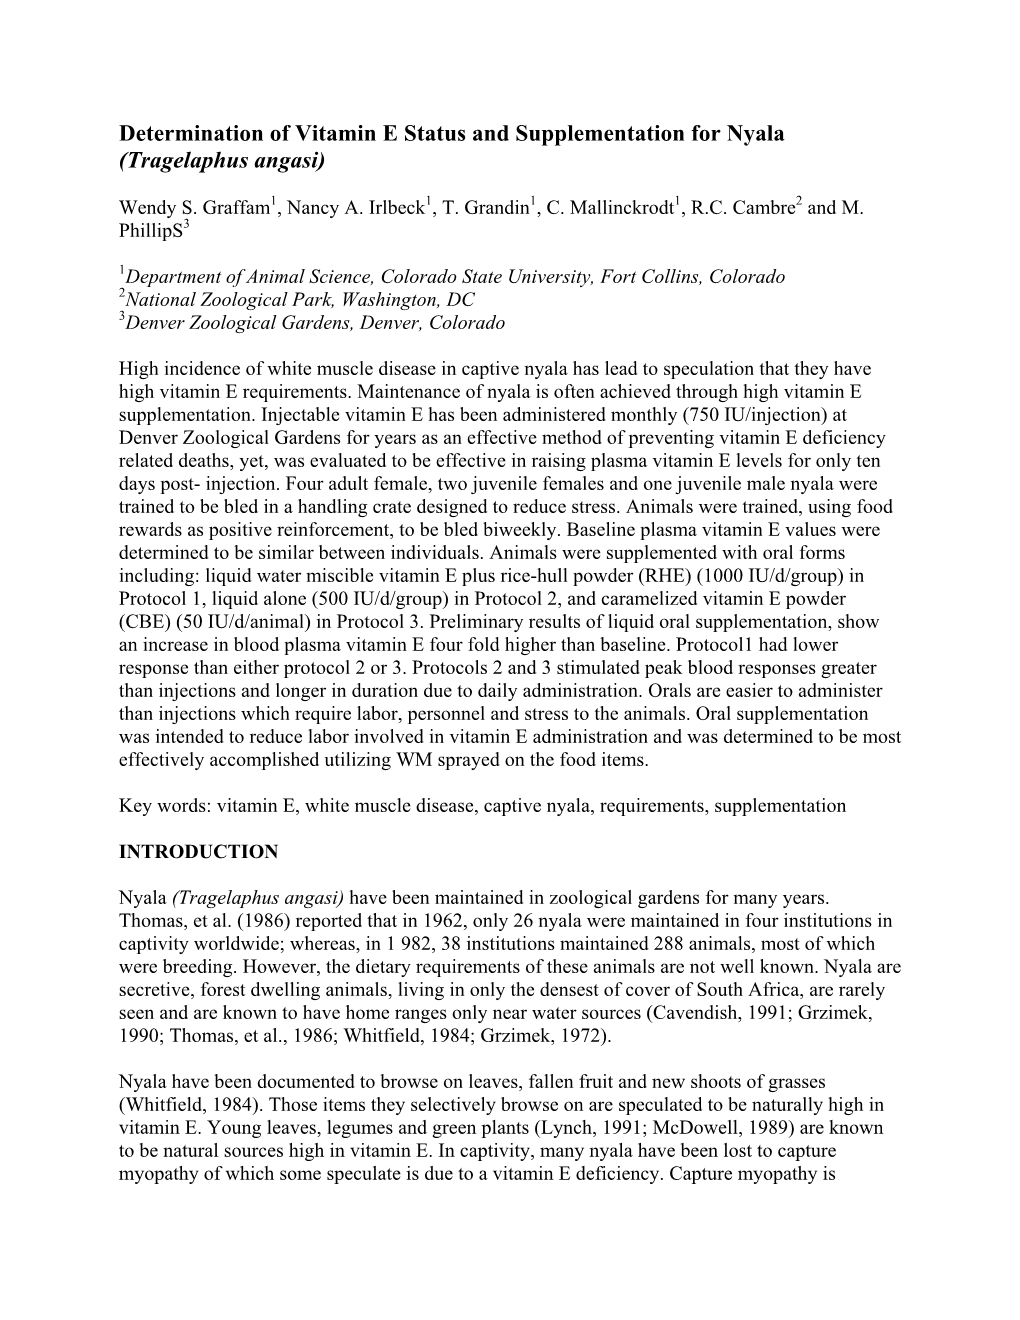 Determination of Vitamin E Status and Supplementation for Nyala (Tragelaphus Angasi)